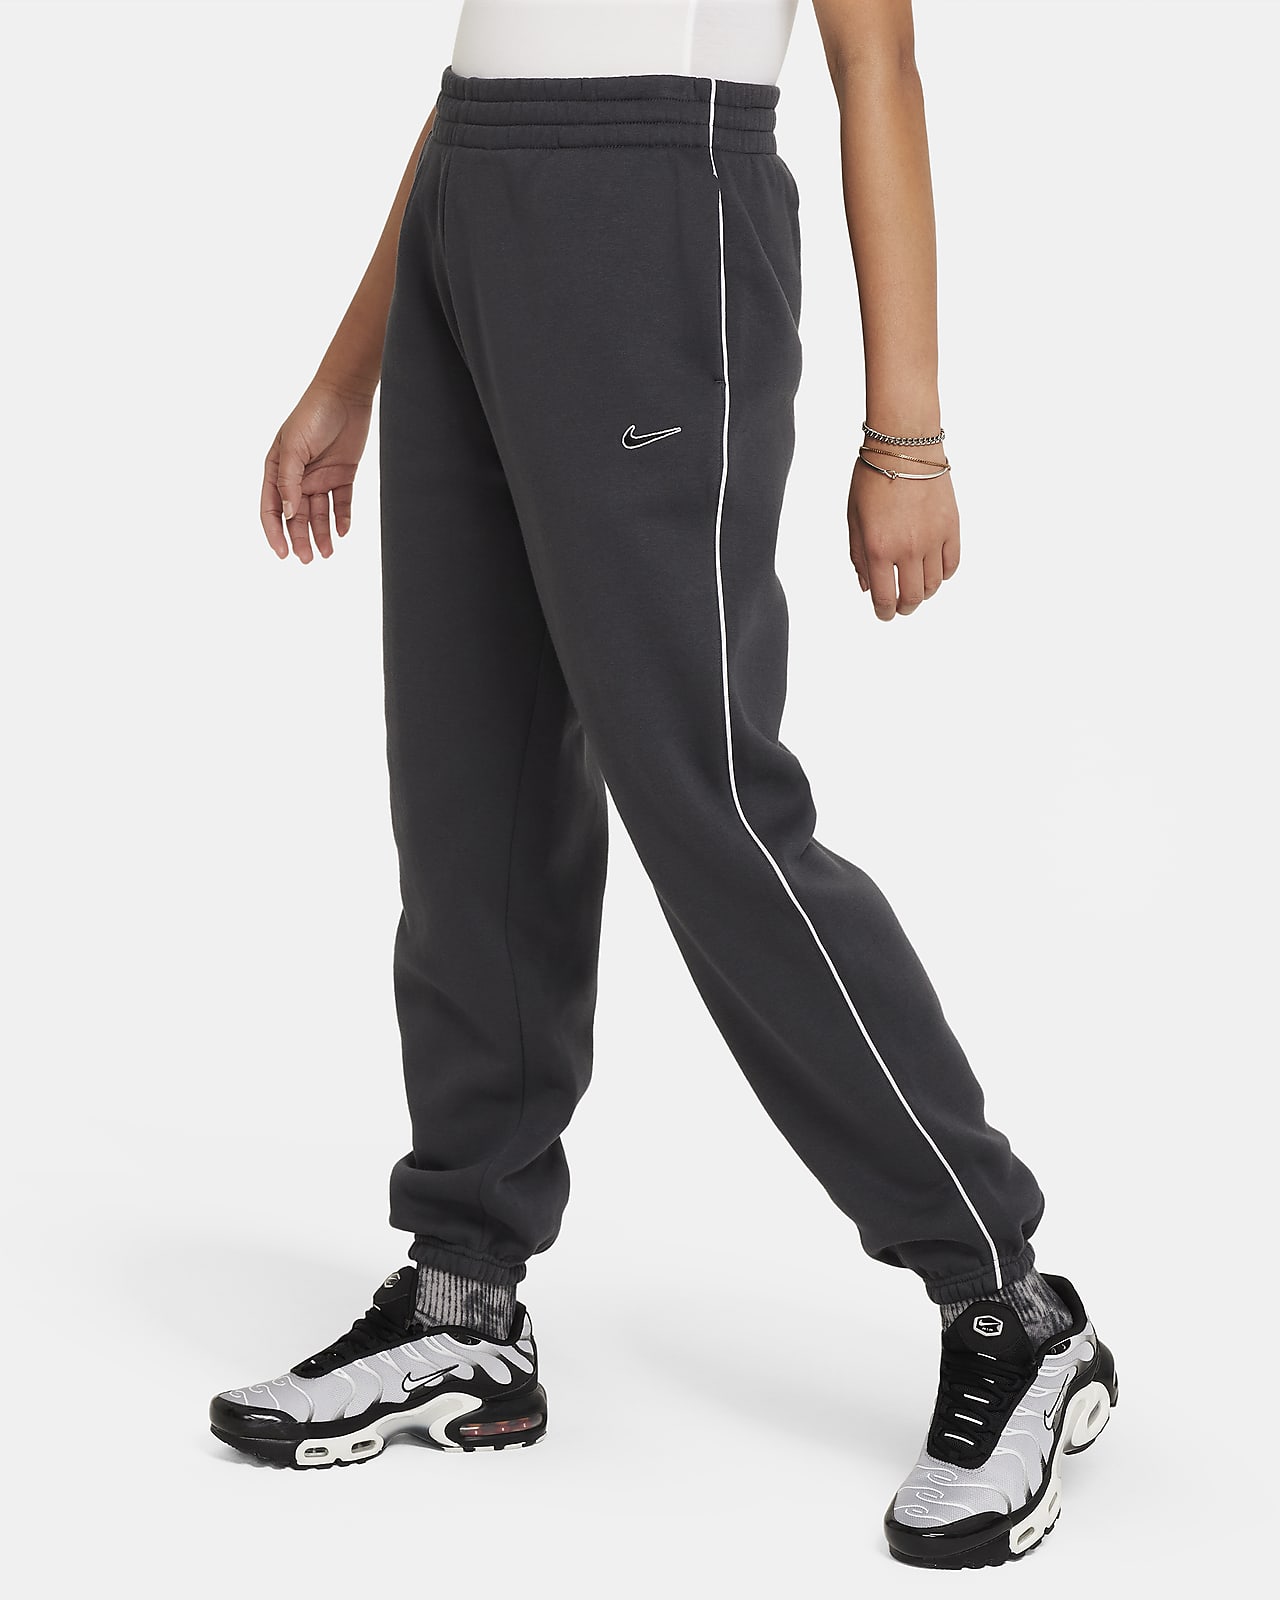 Fleecebyxor Nike Sportswear i oversizemodell för ungdom (tjejer)